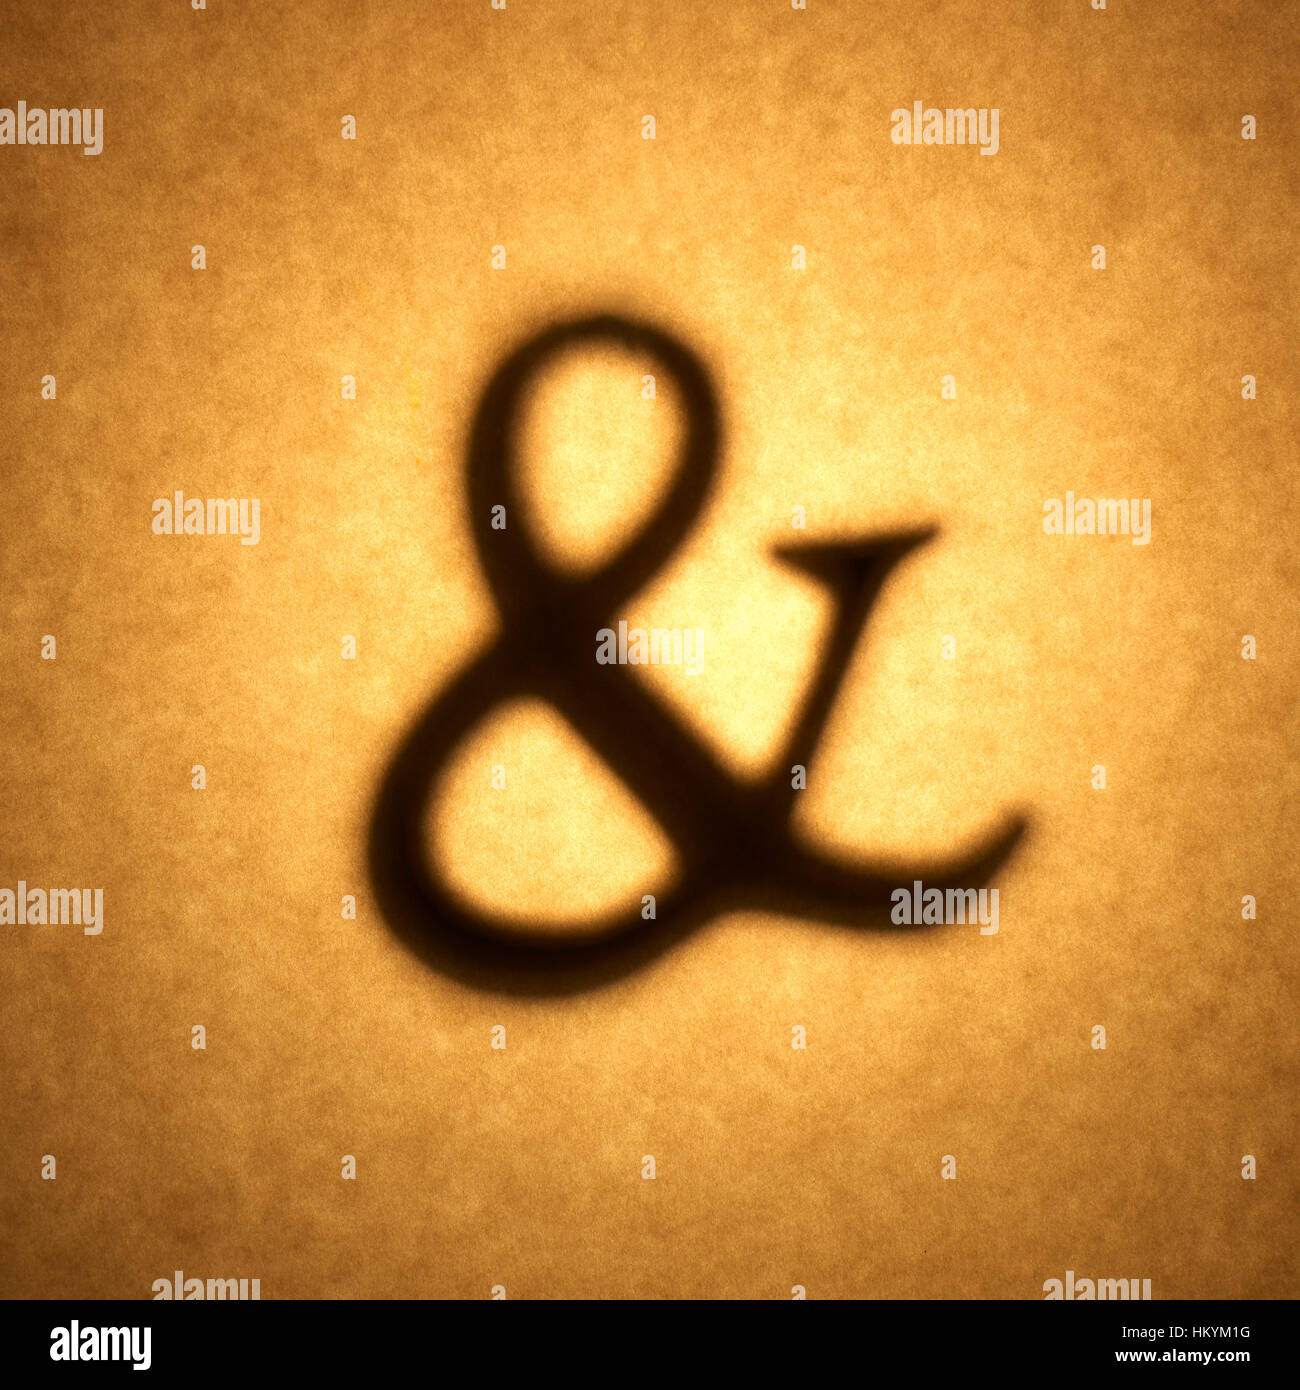 Silueta retroiluminado de ampersand forma recortada contra tono marrón de papel con manchas de resalte. Foto de stock